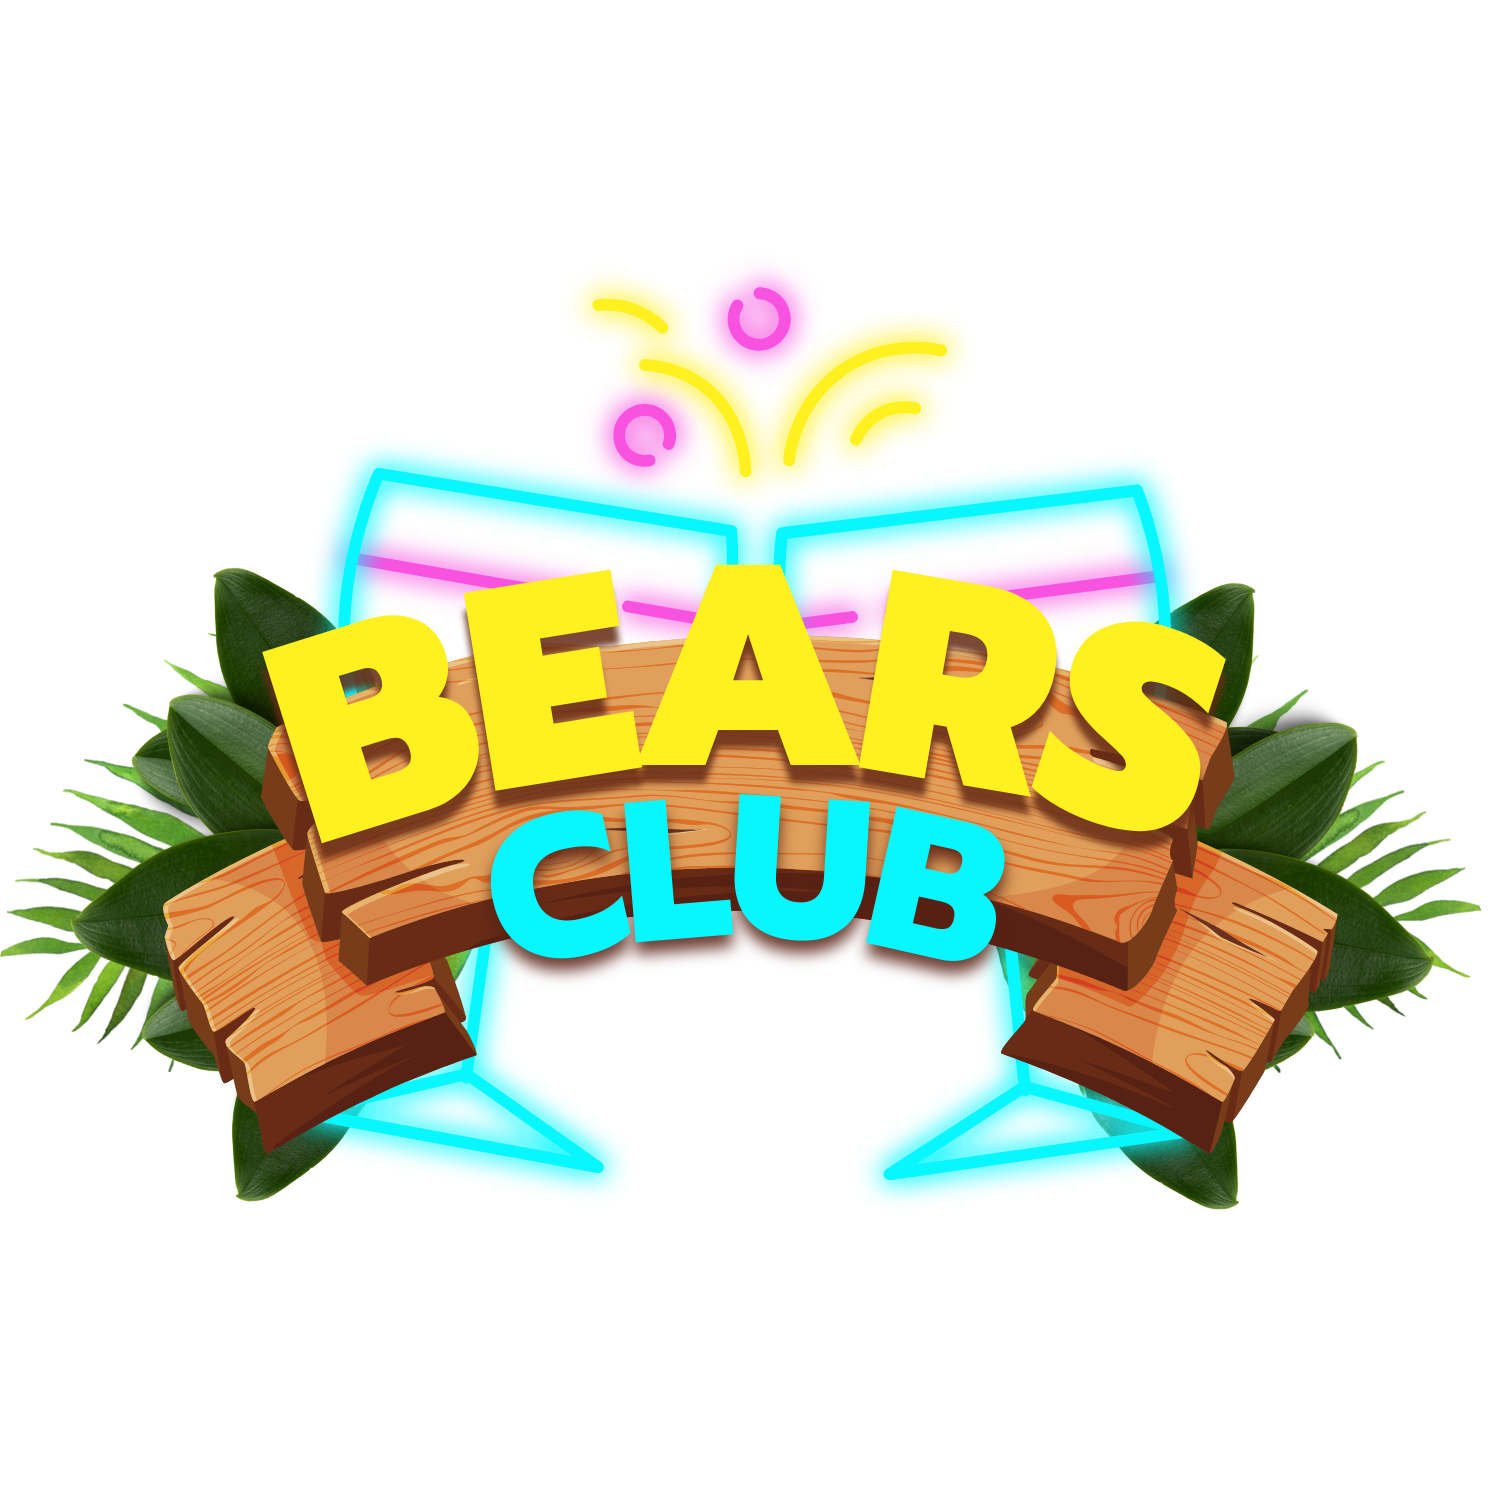 Bears Club logo